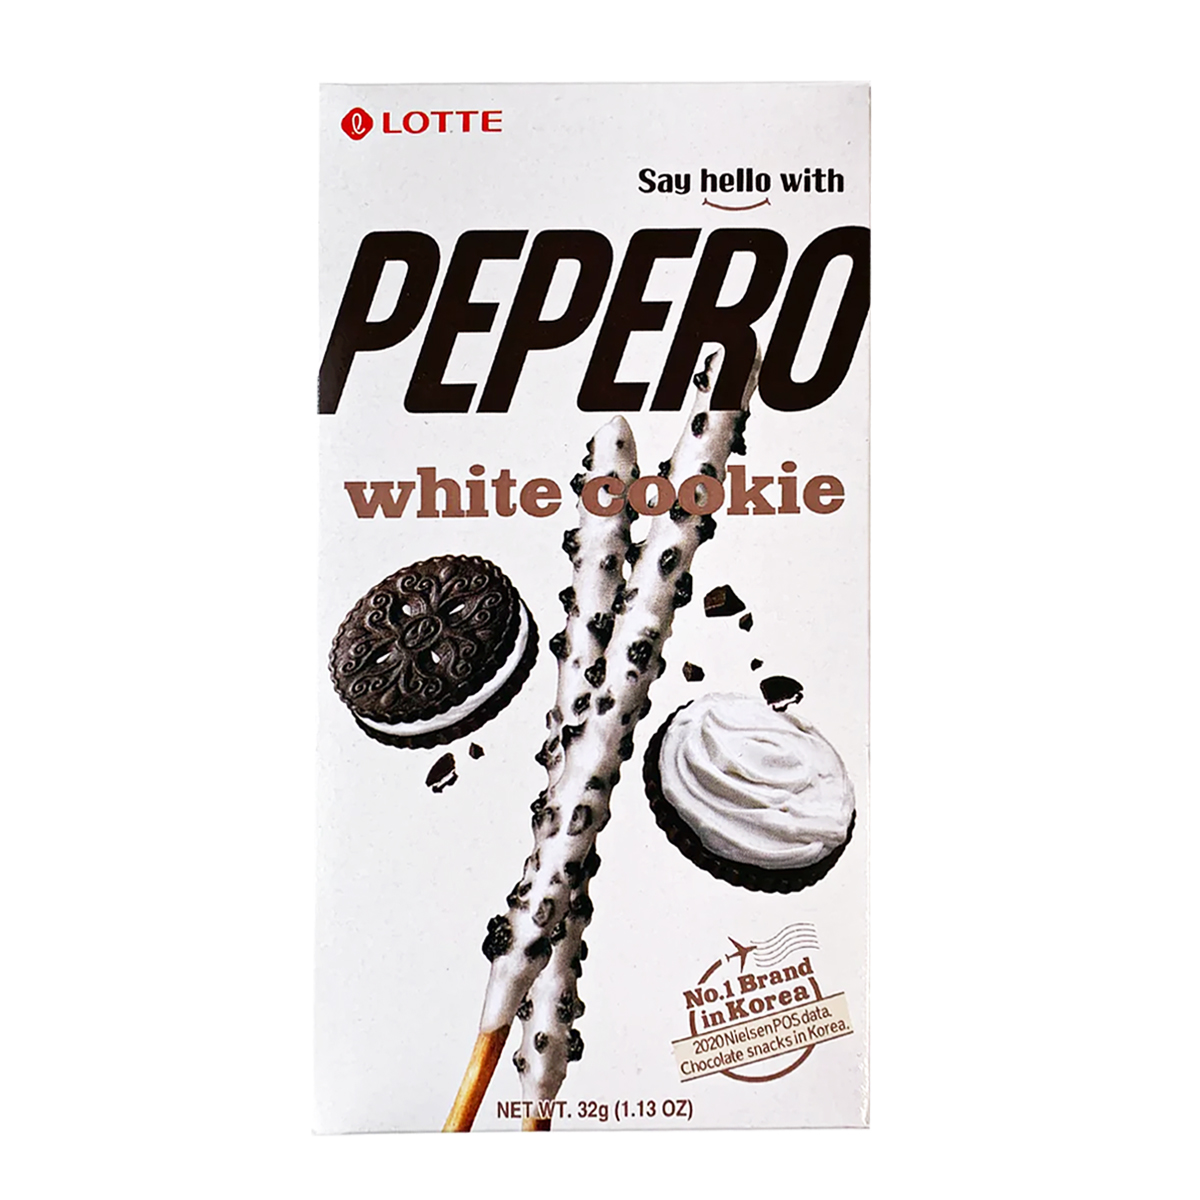 Dulciuri - White Cookie Pepero LOTTE 32g, asianfood.ro